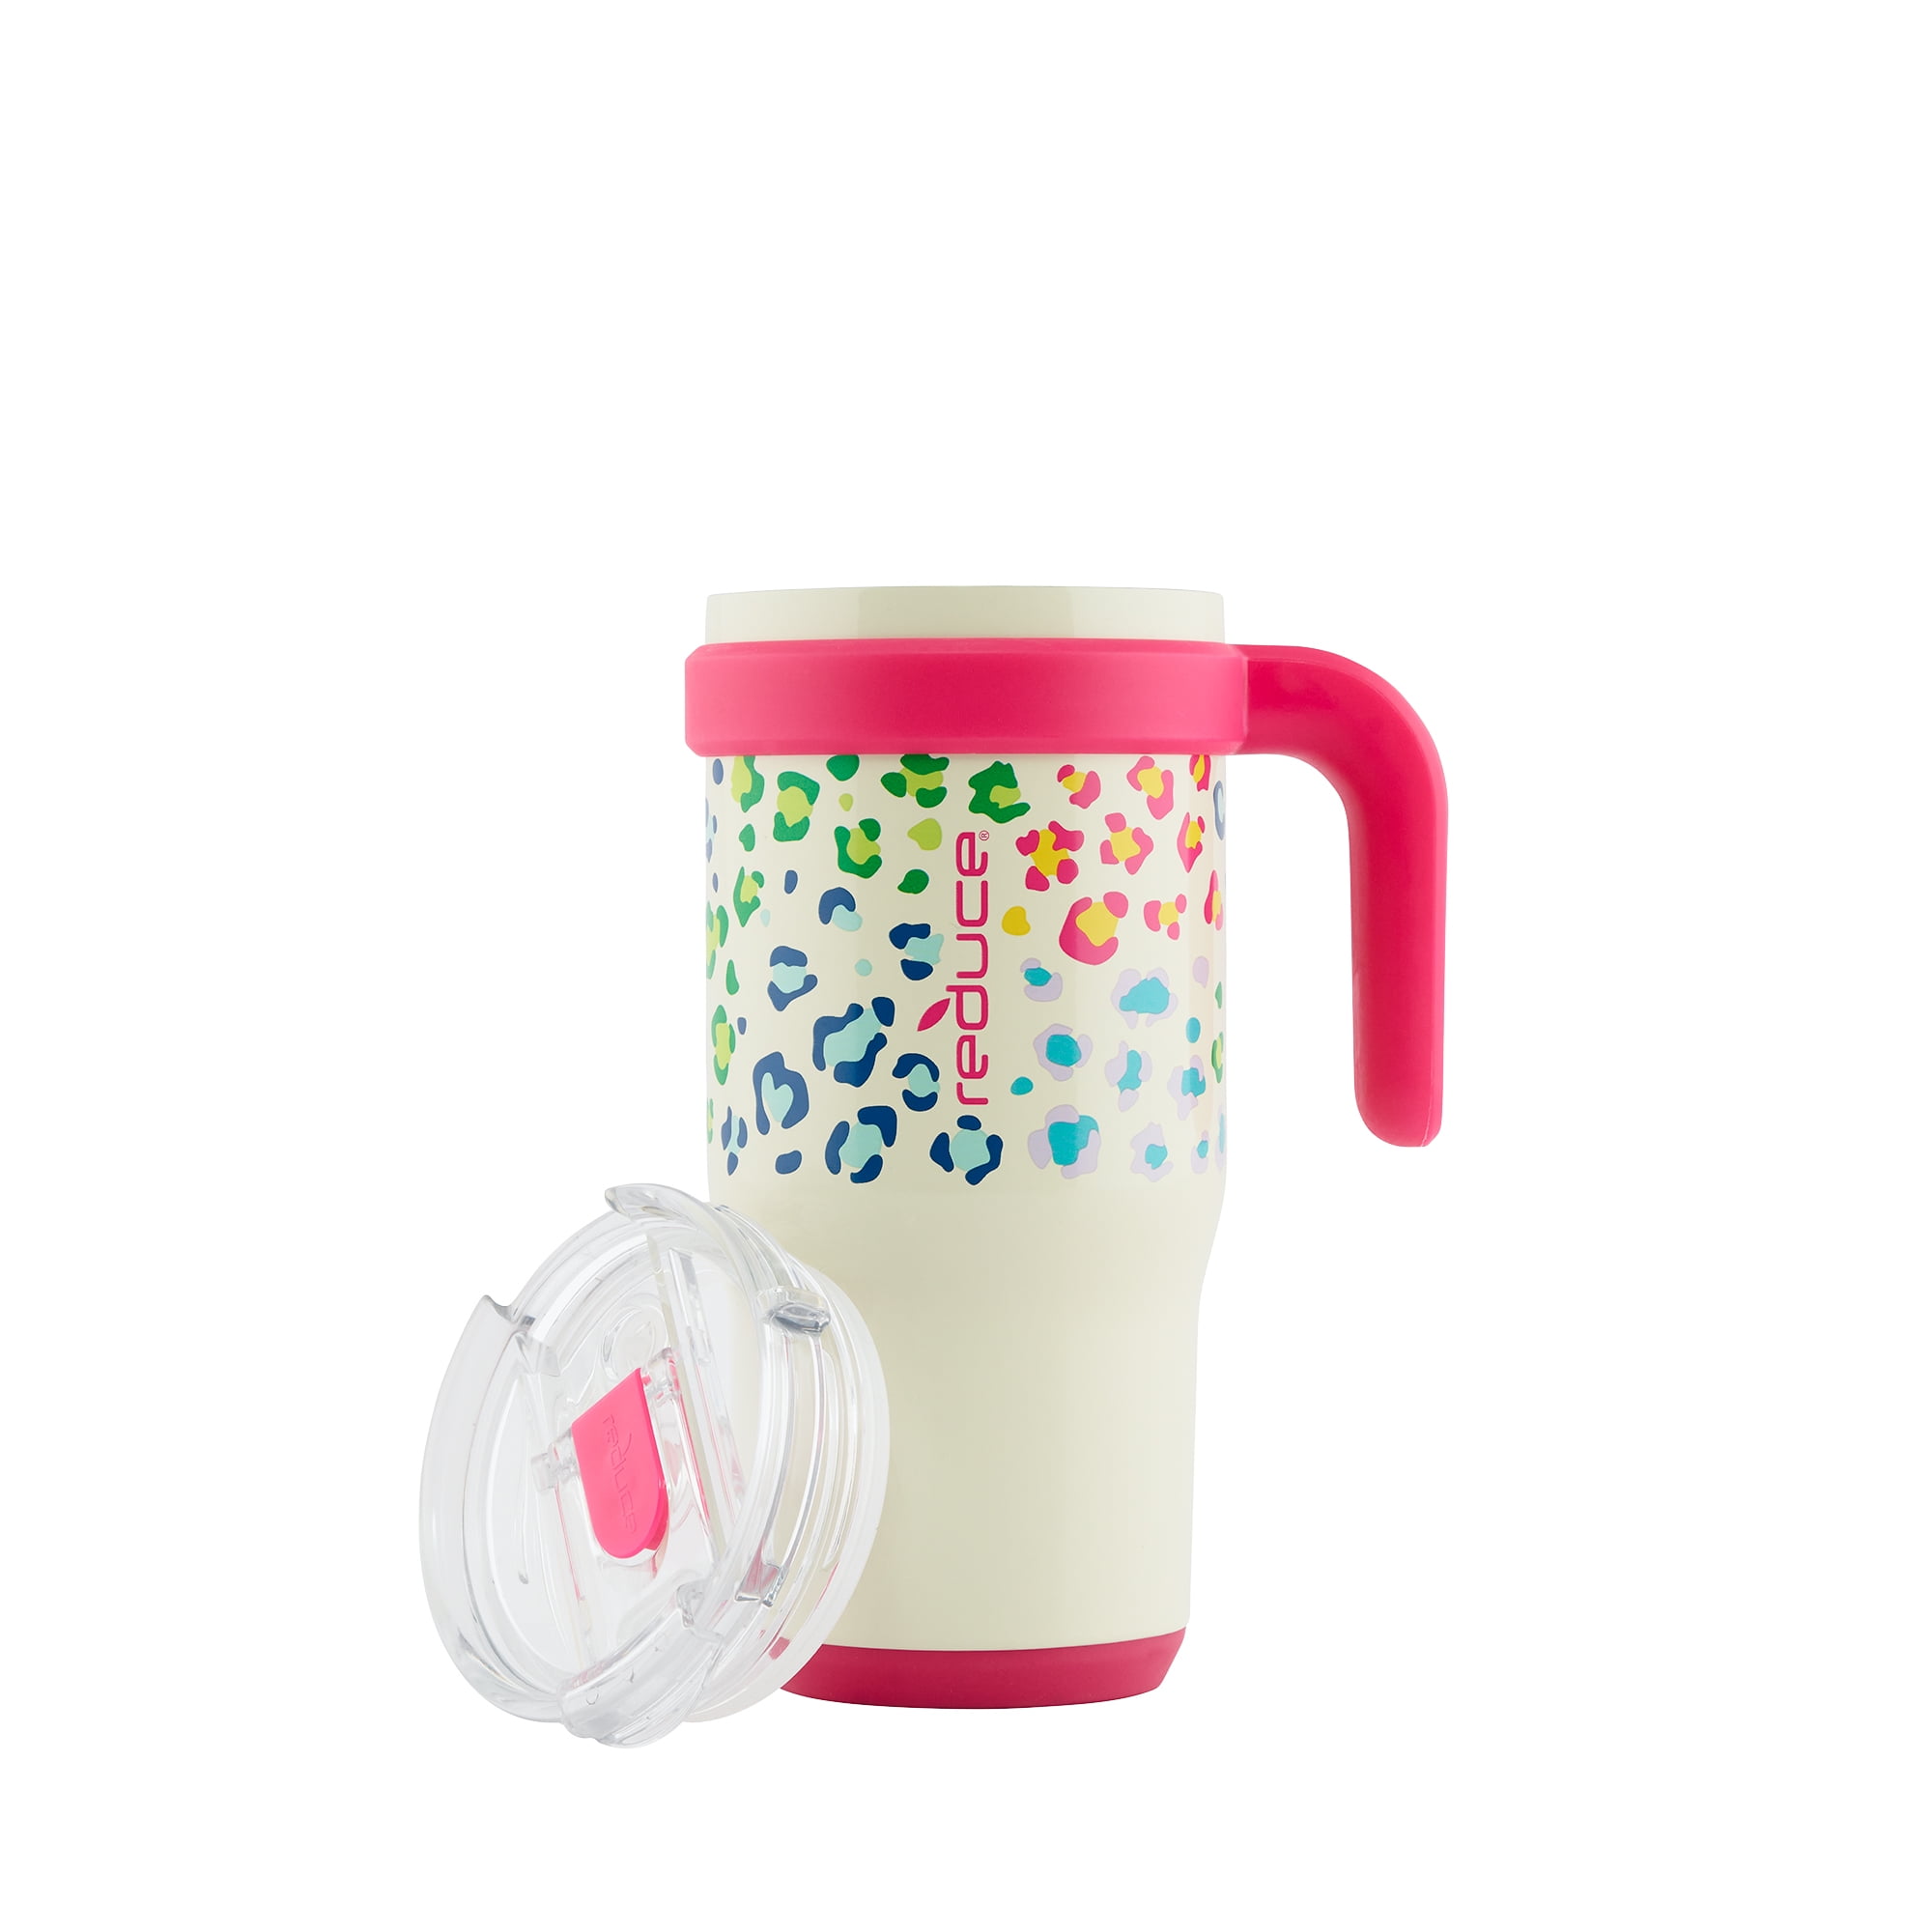 Reduce® Coldee Kids Mug - Pink Lemonade, 14 oz - Pick 'n Save